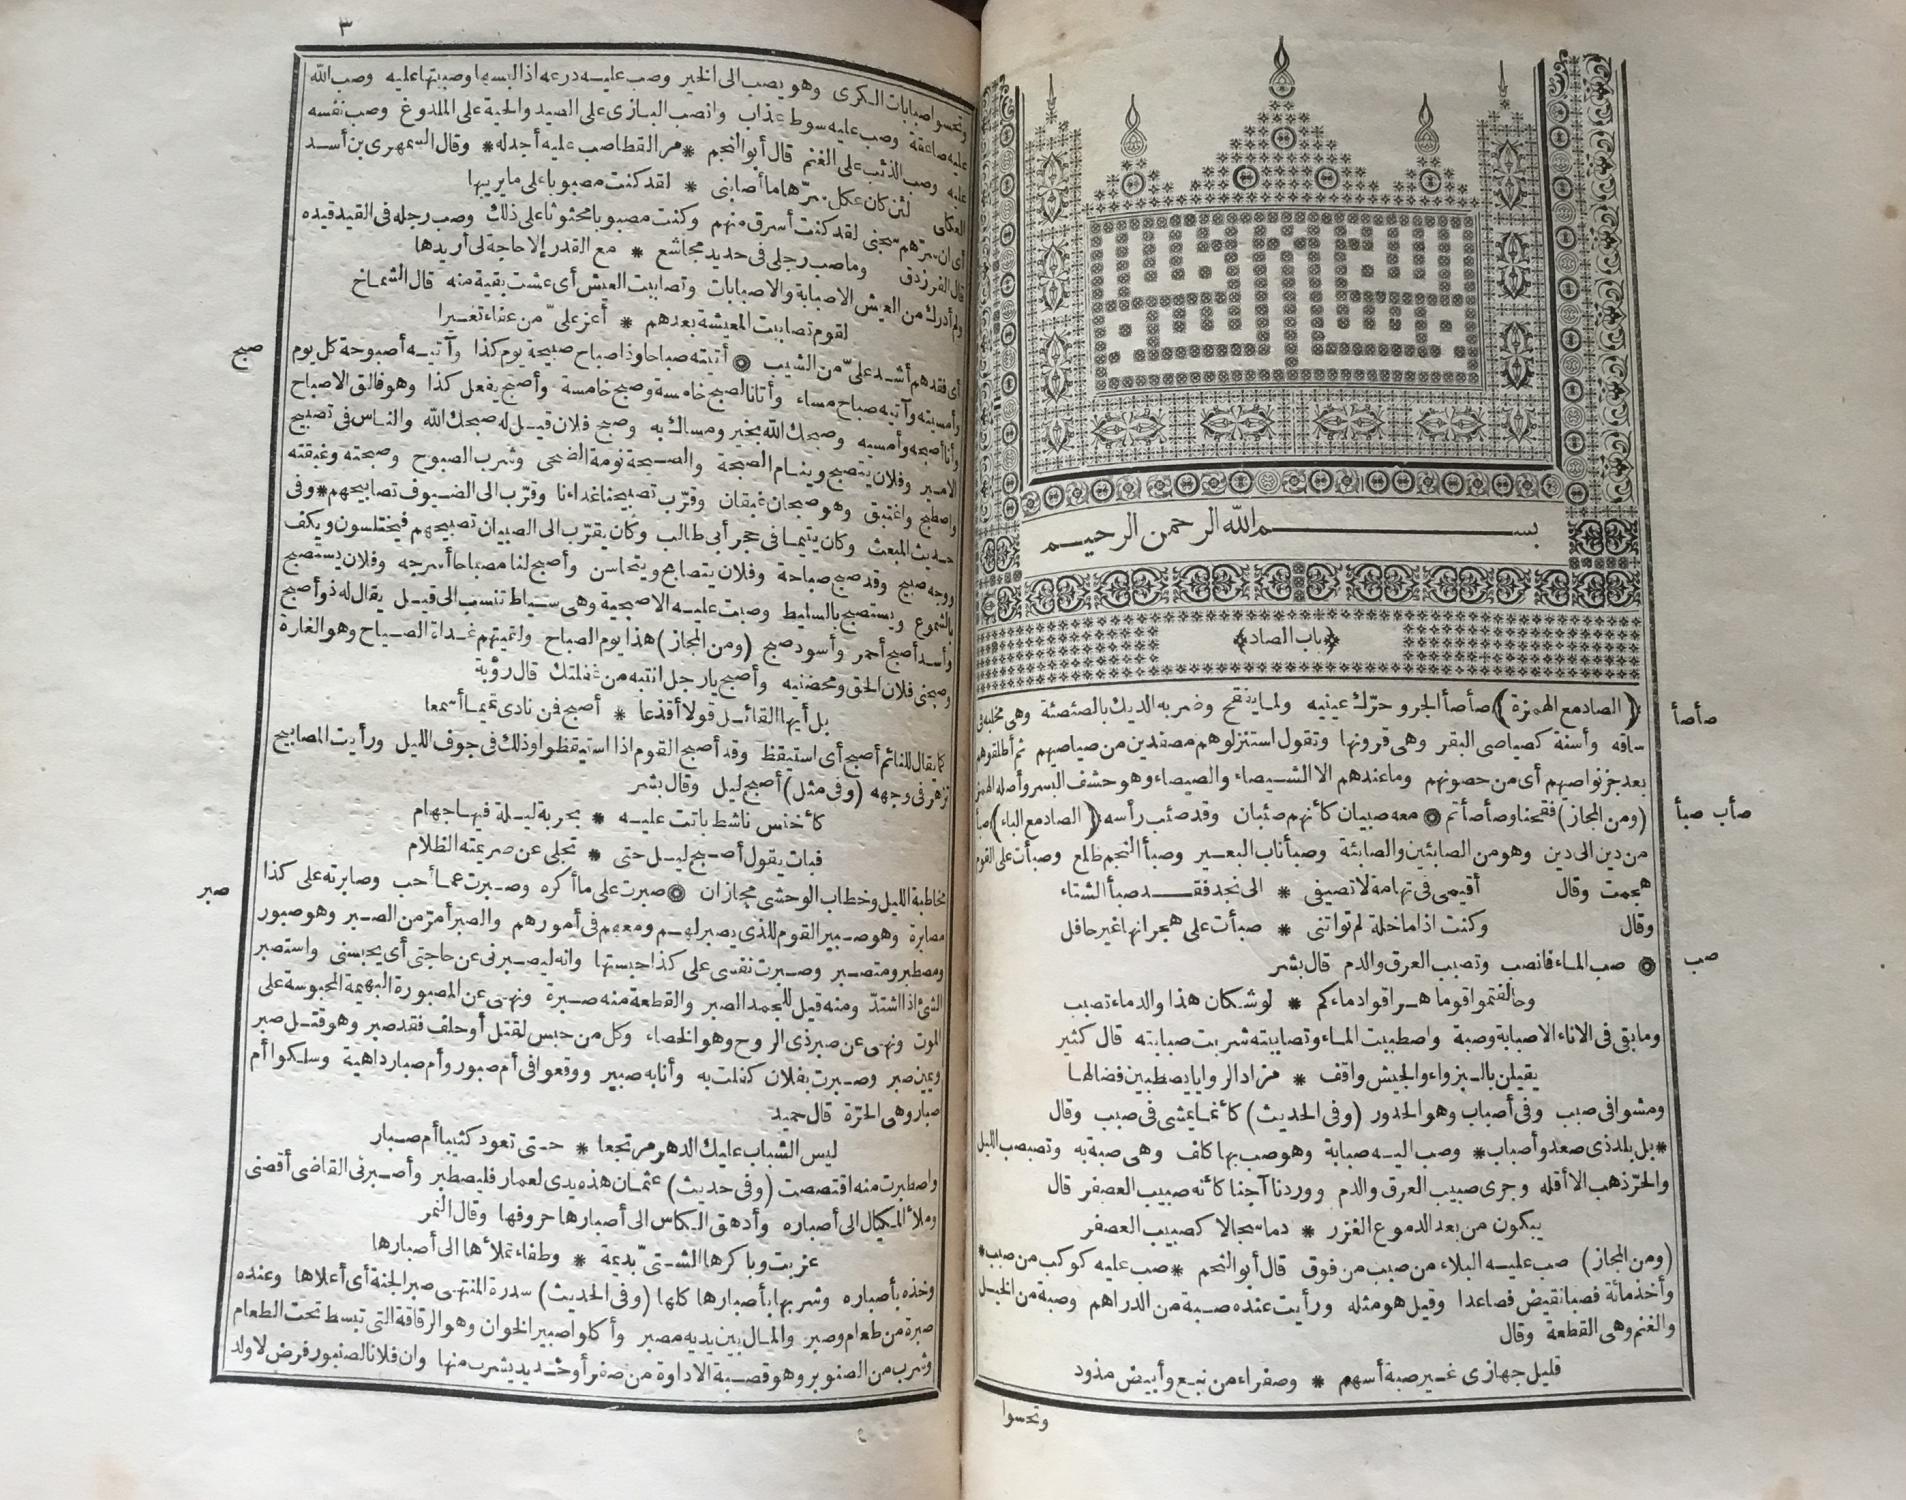 al-Siyalkuti 'ala al-Mutawwal. - Al-Siyalkuti, 'Abd al-Hakim Ibn Shams al-Din.